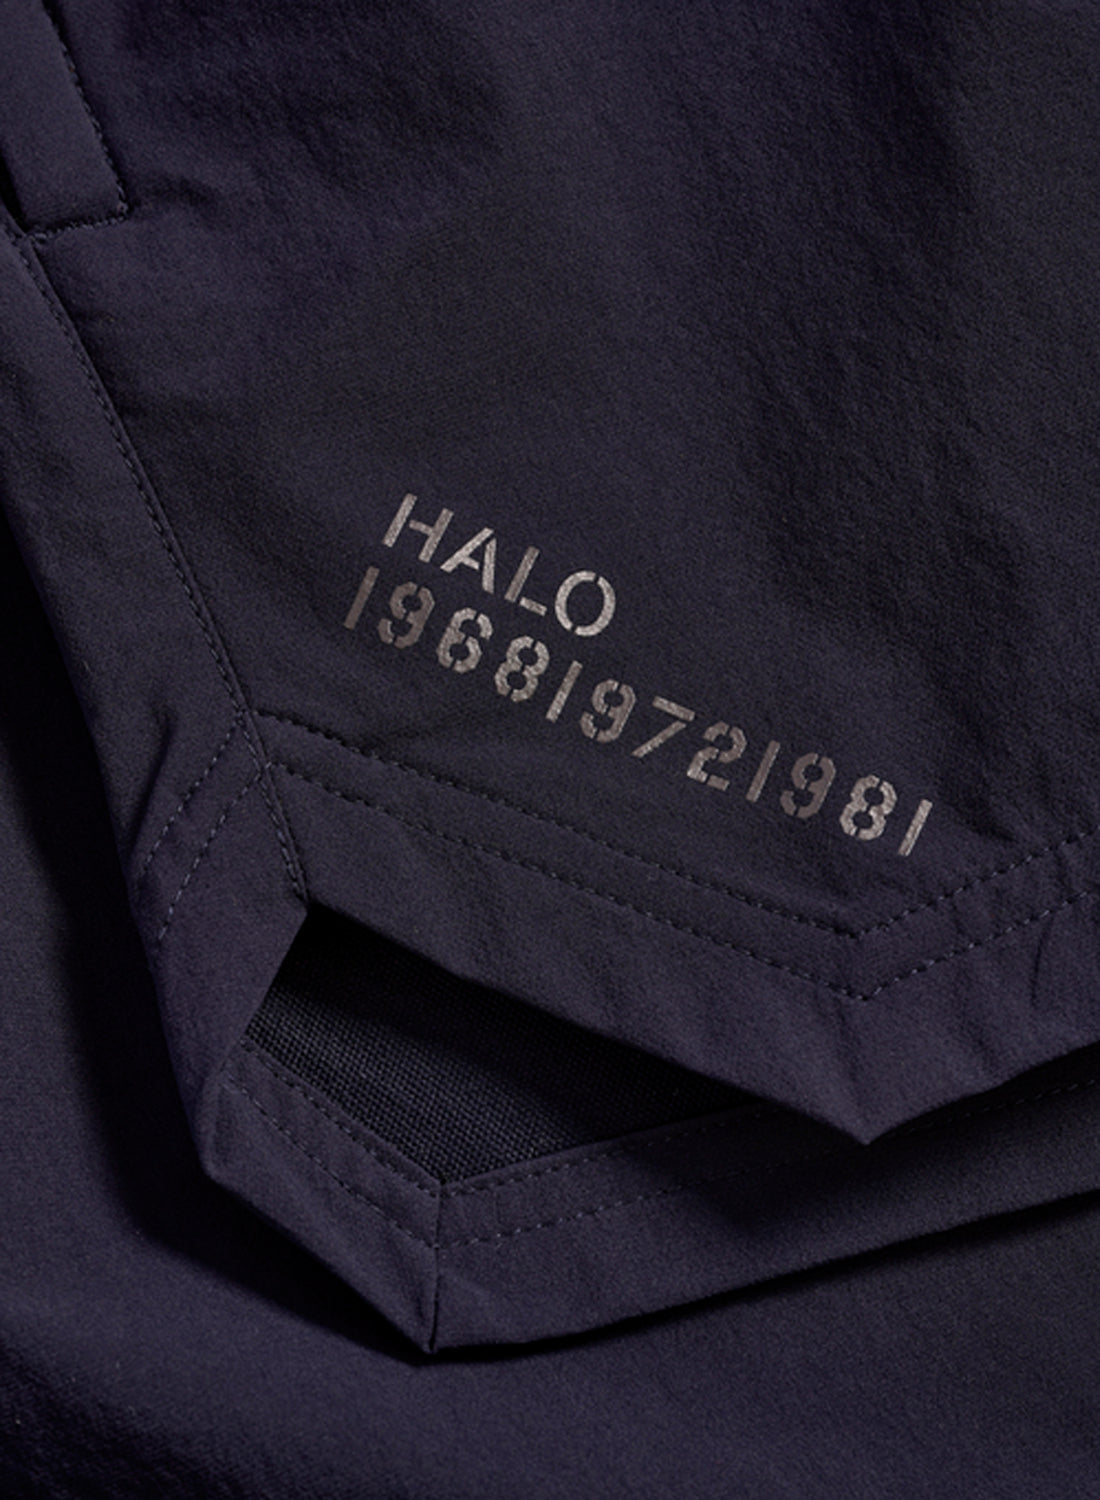 Halo Shorts Deep Well